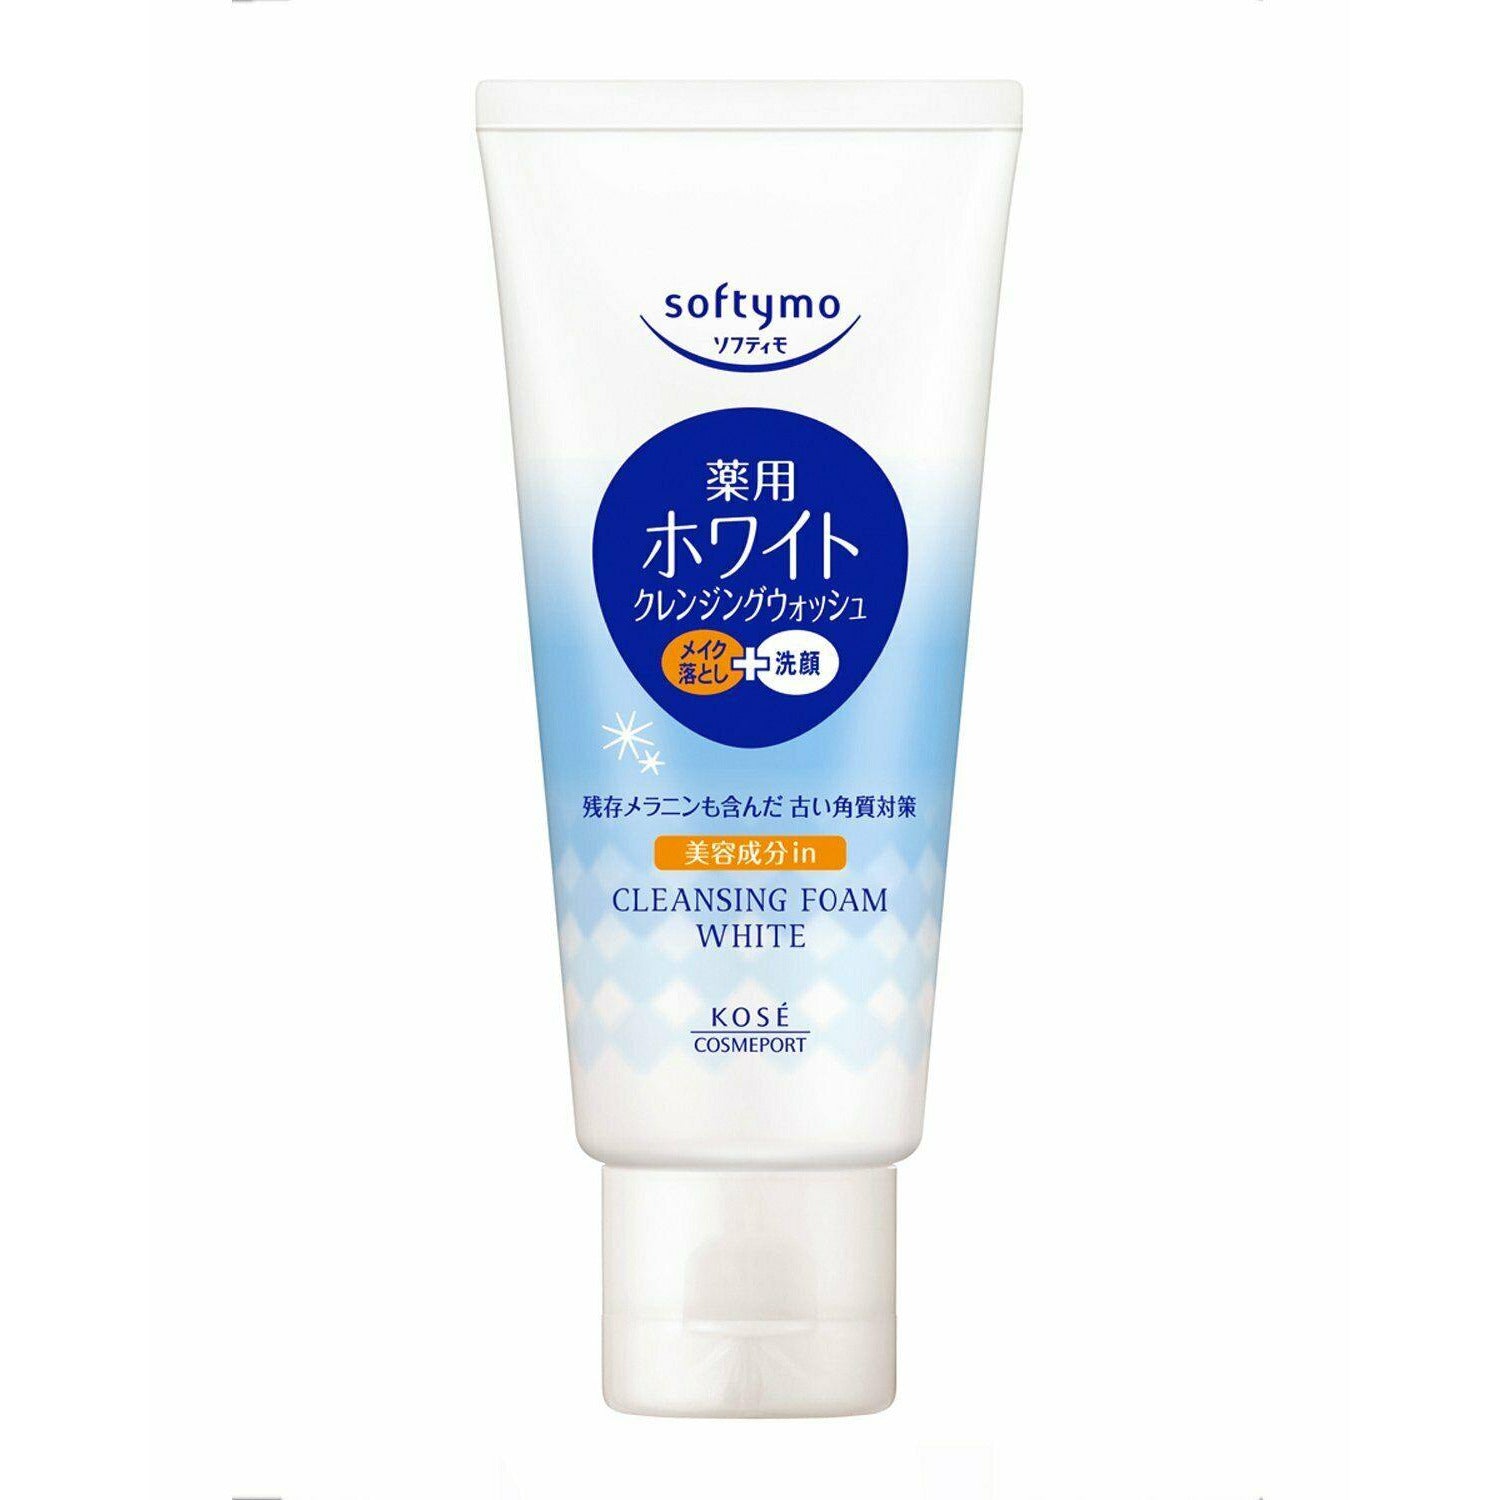 KOSE softymo Makeup remover + Face wash Skin brightening treatment Mini 60g